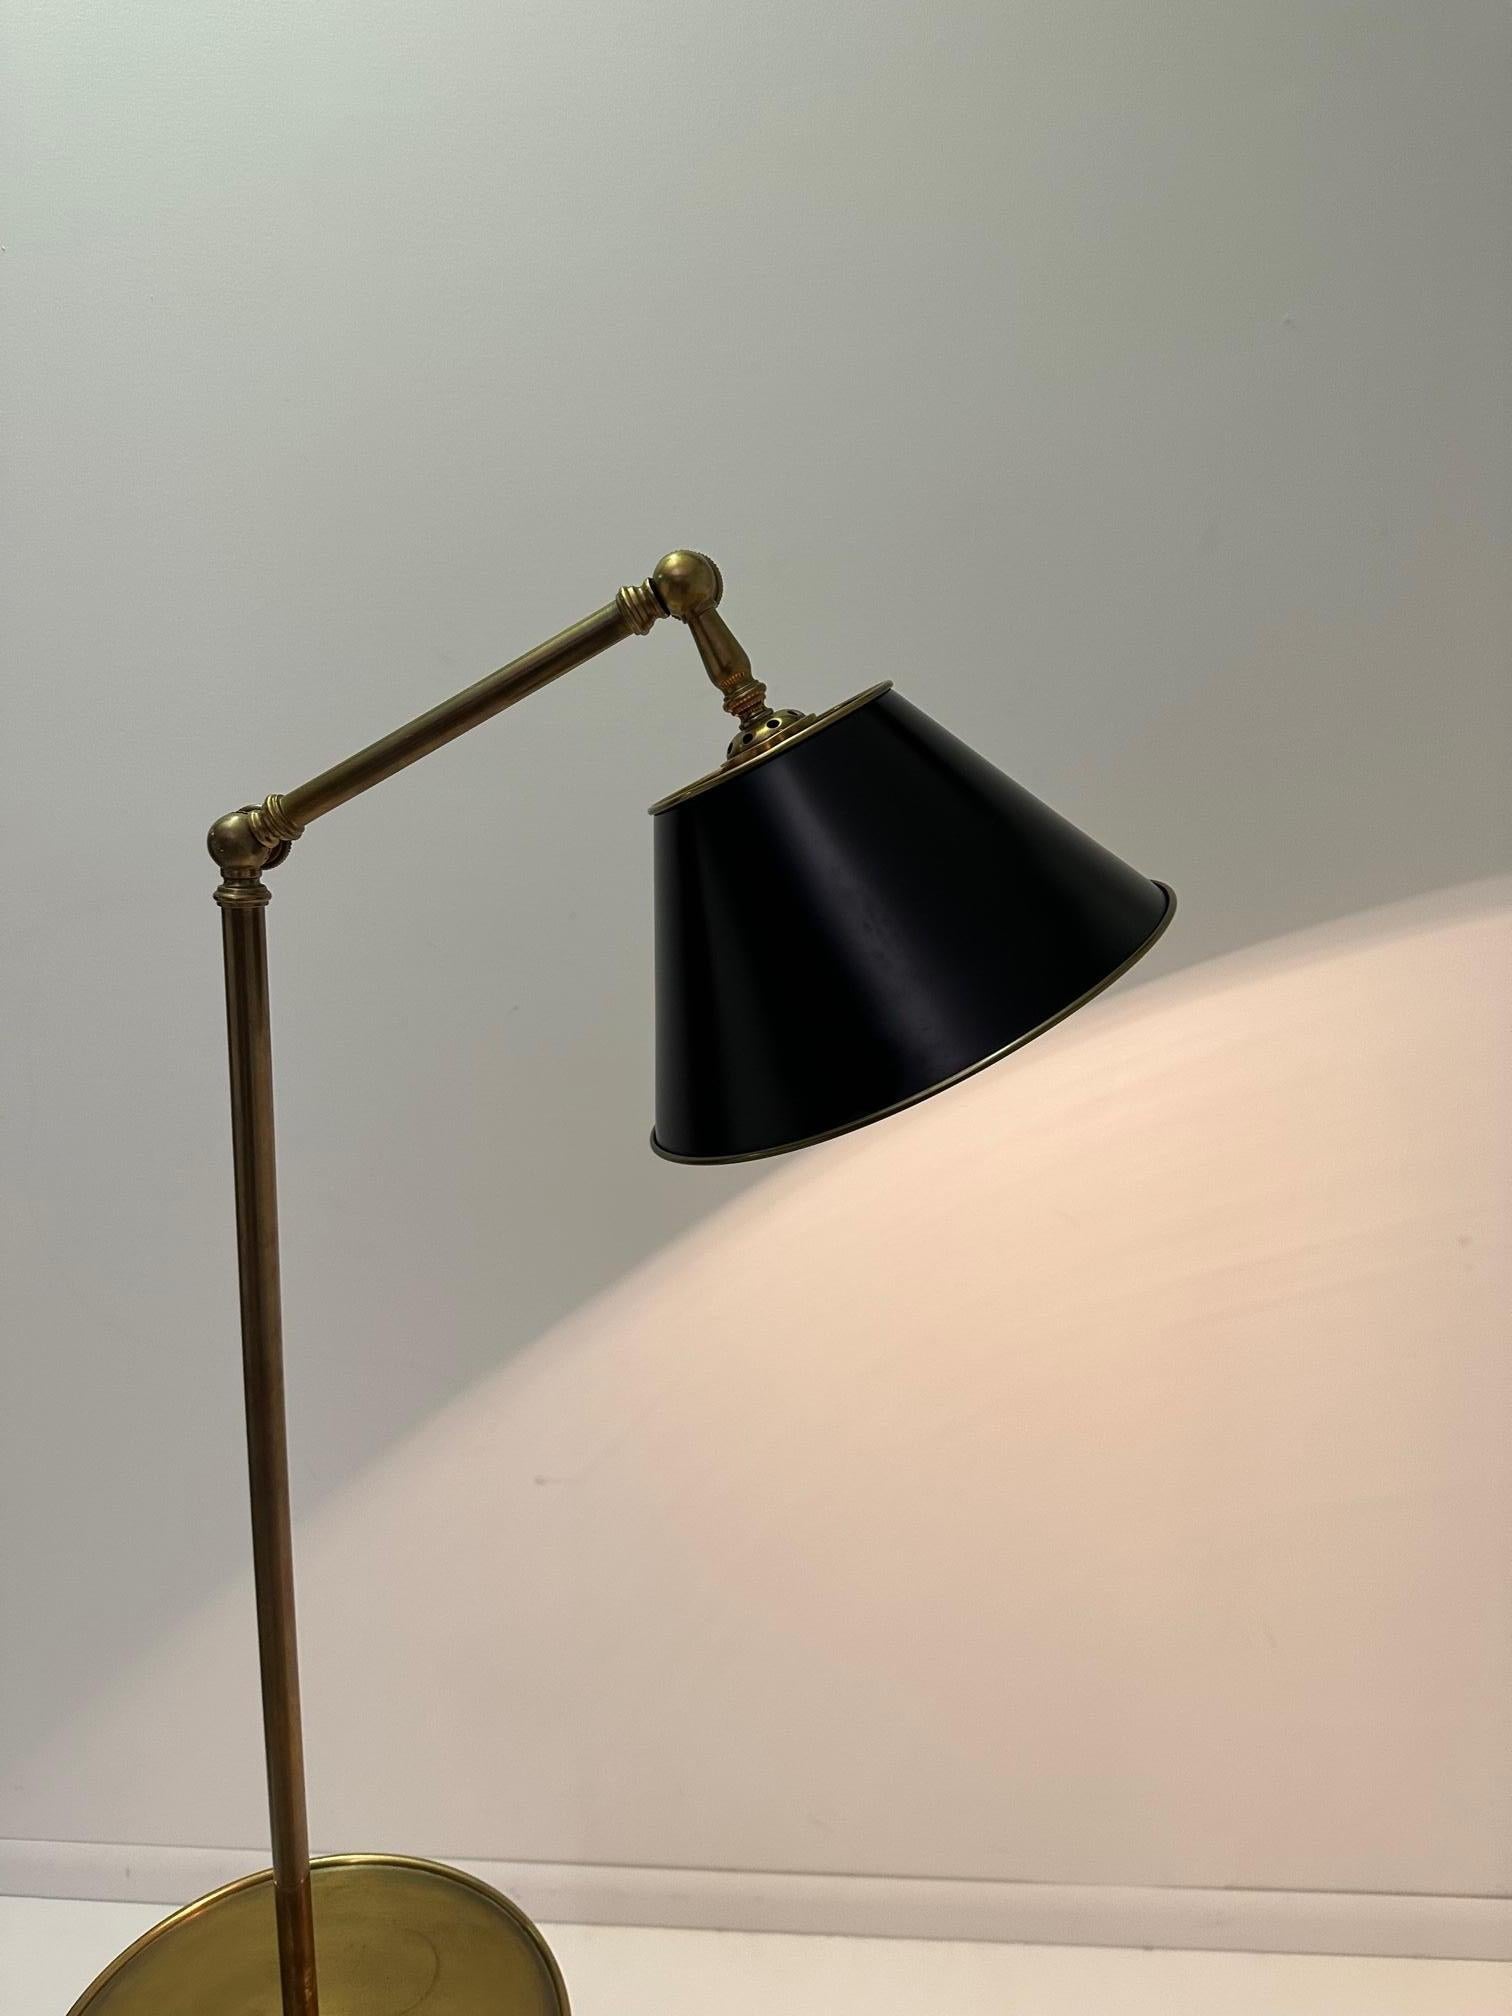 Stunning Chapman Brass Floor Lamp with Adjustable Shade 4